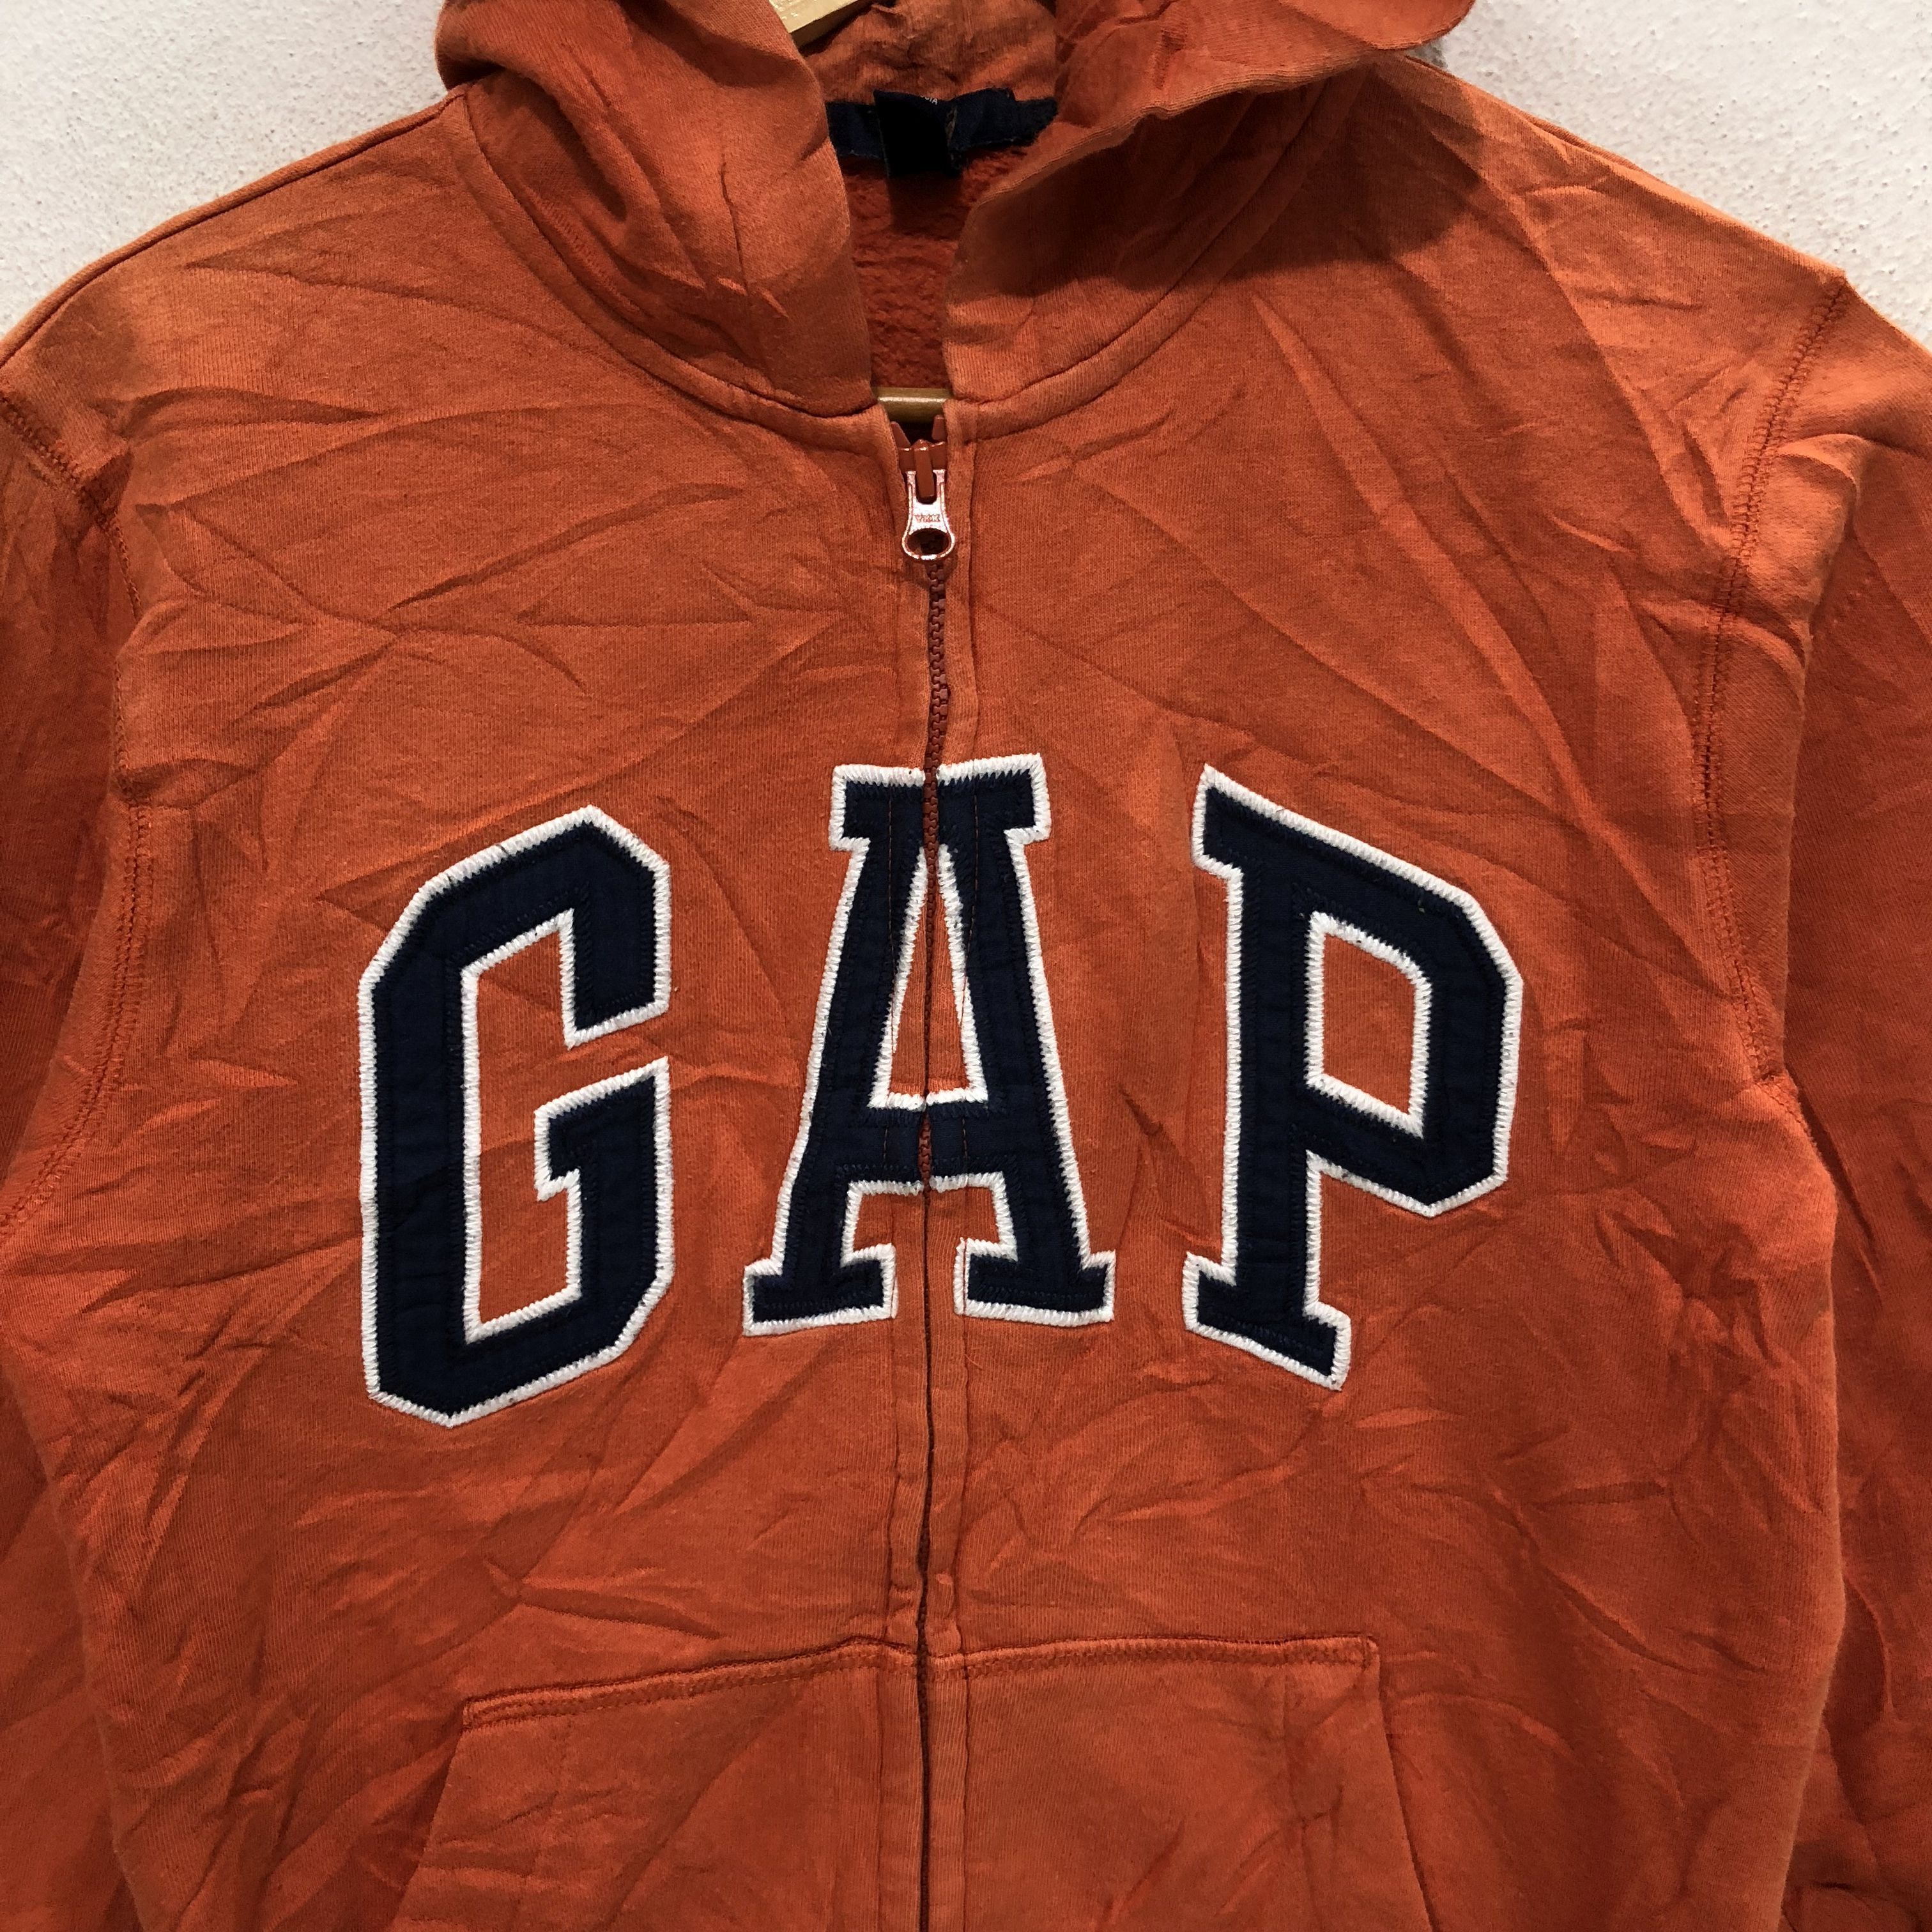 Gap Gap Zip Up Hoodie Sweater Spell Out Orange Sweatshirt Size Large Size US L / EU 52-54 / 3 - 4 Thumbnail